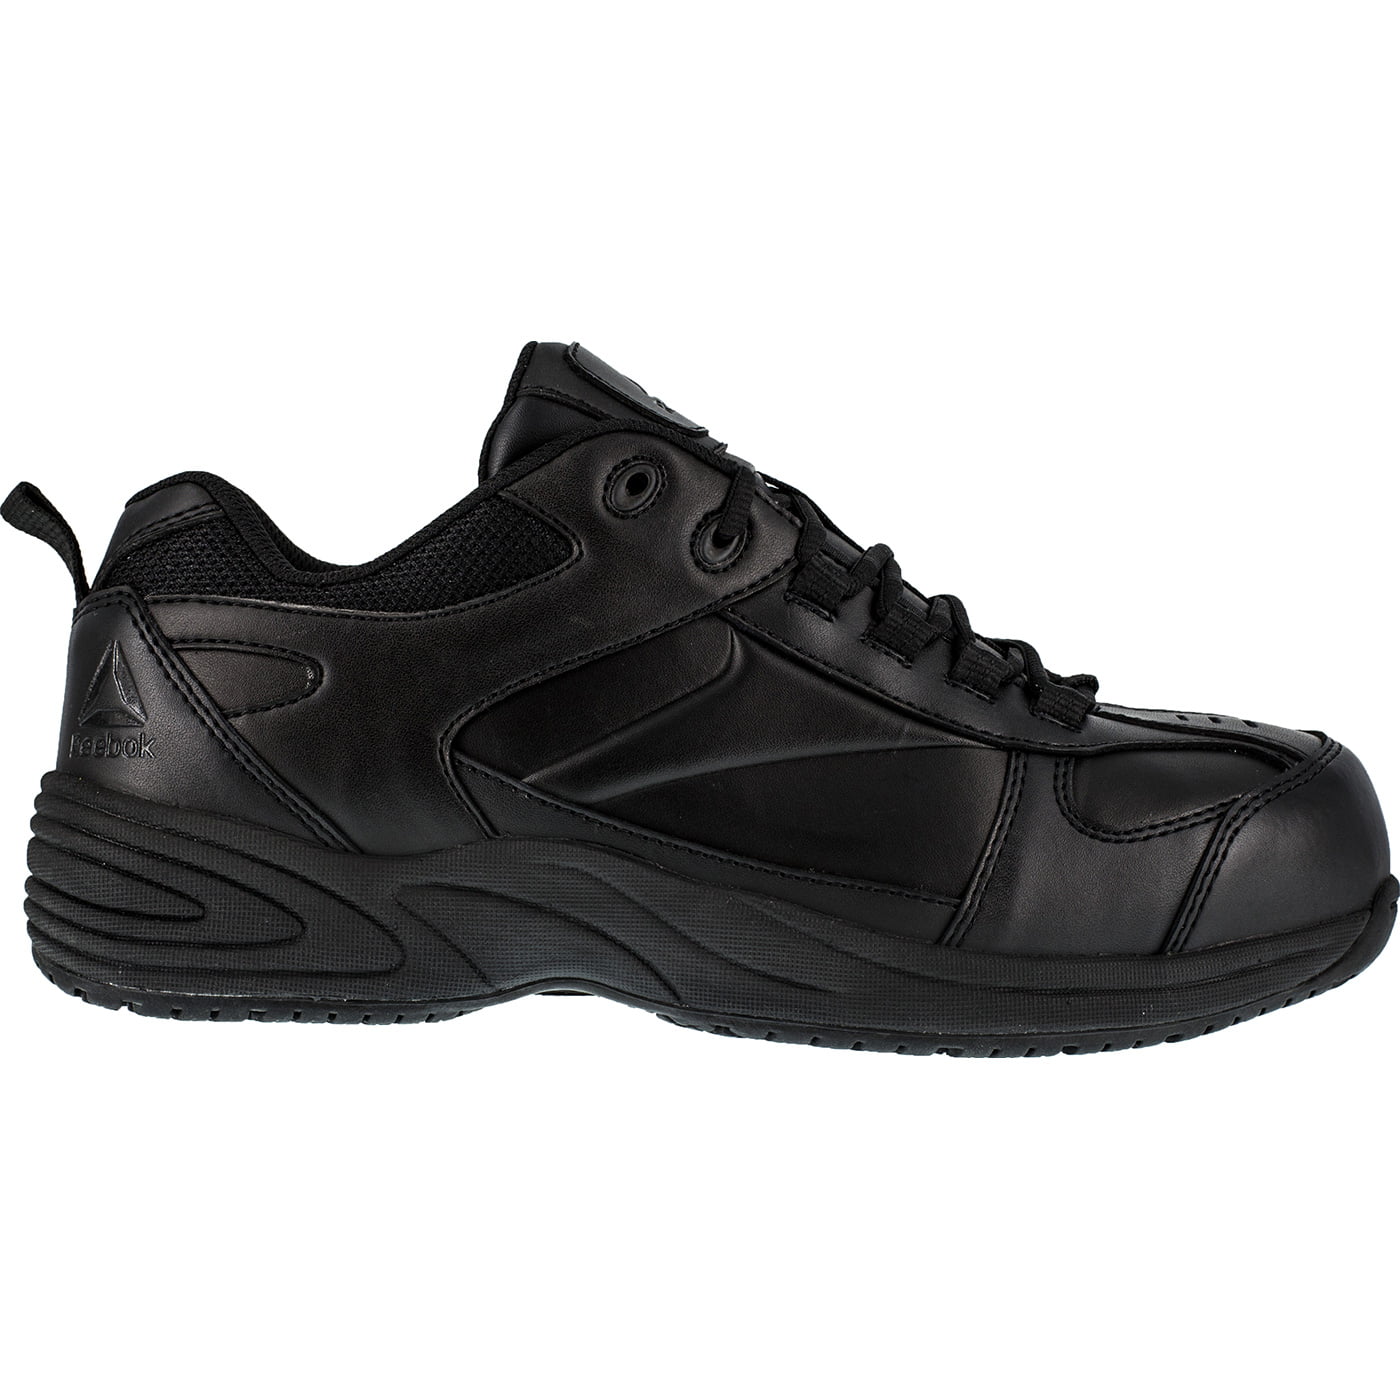 Reebok Black Leather Street Sport Jogger Oxford Jorie Comp Toe 10.5 W - Walmart.com